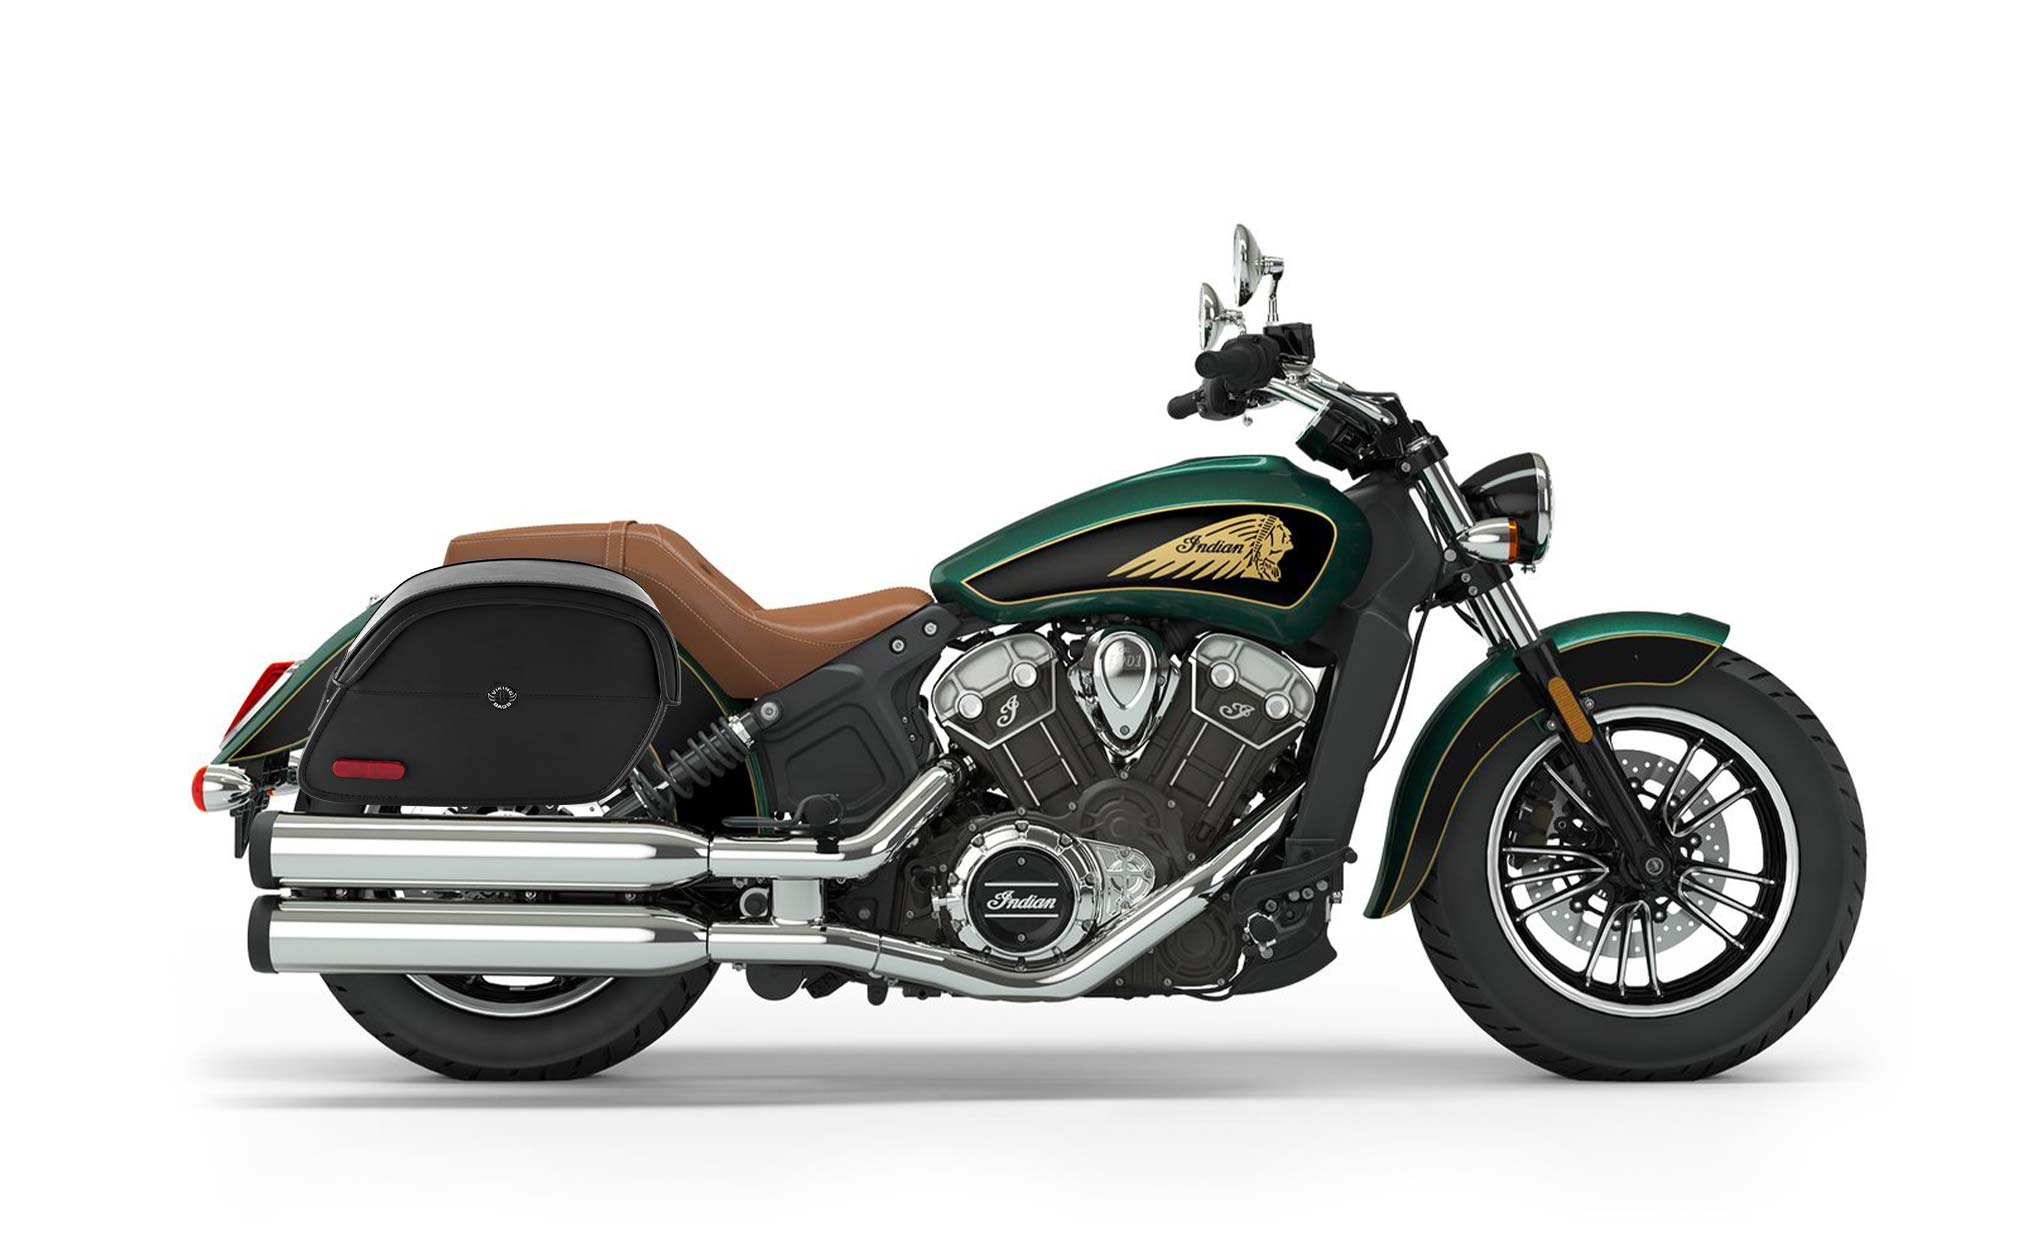 Viking California Large Indian Scout Leather Motorcycle Saddlebags on Bike Photo @expand